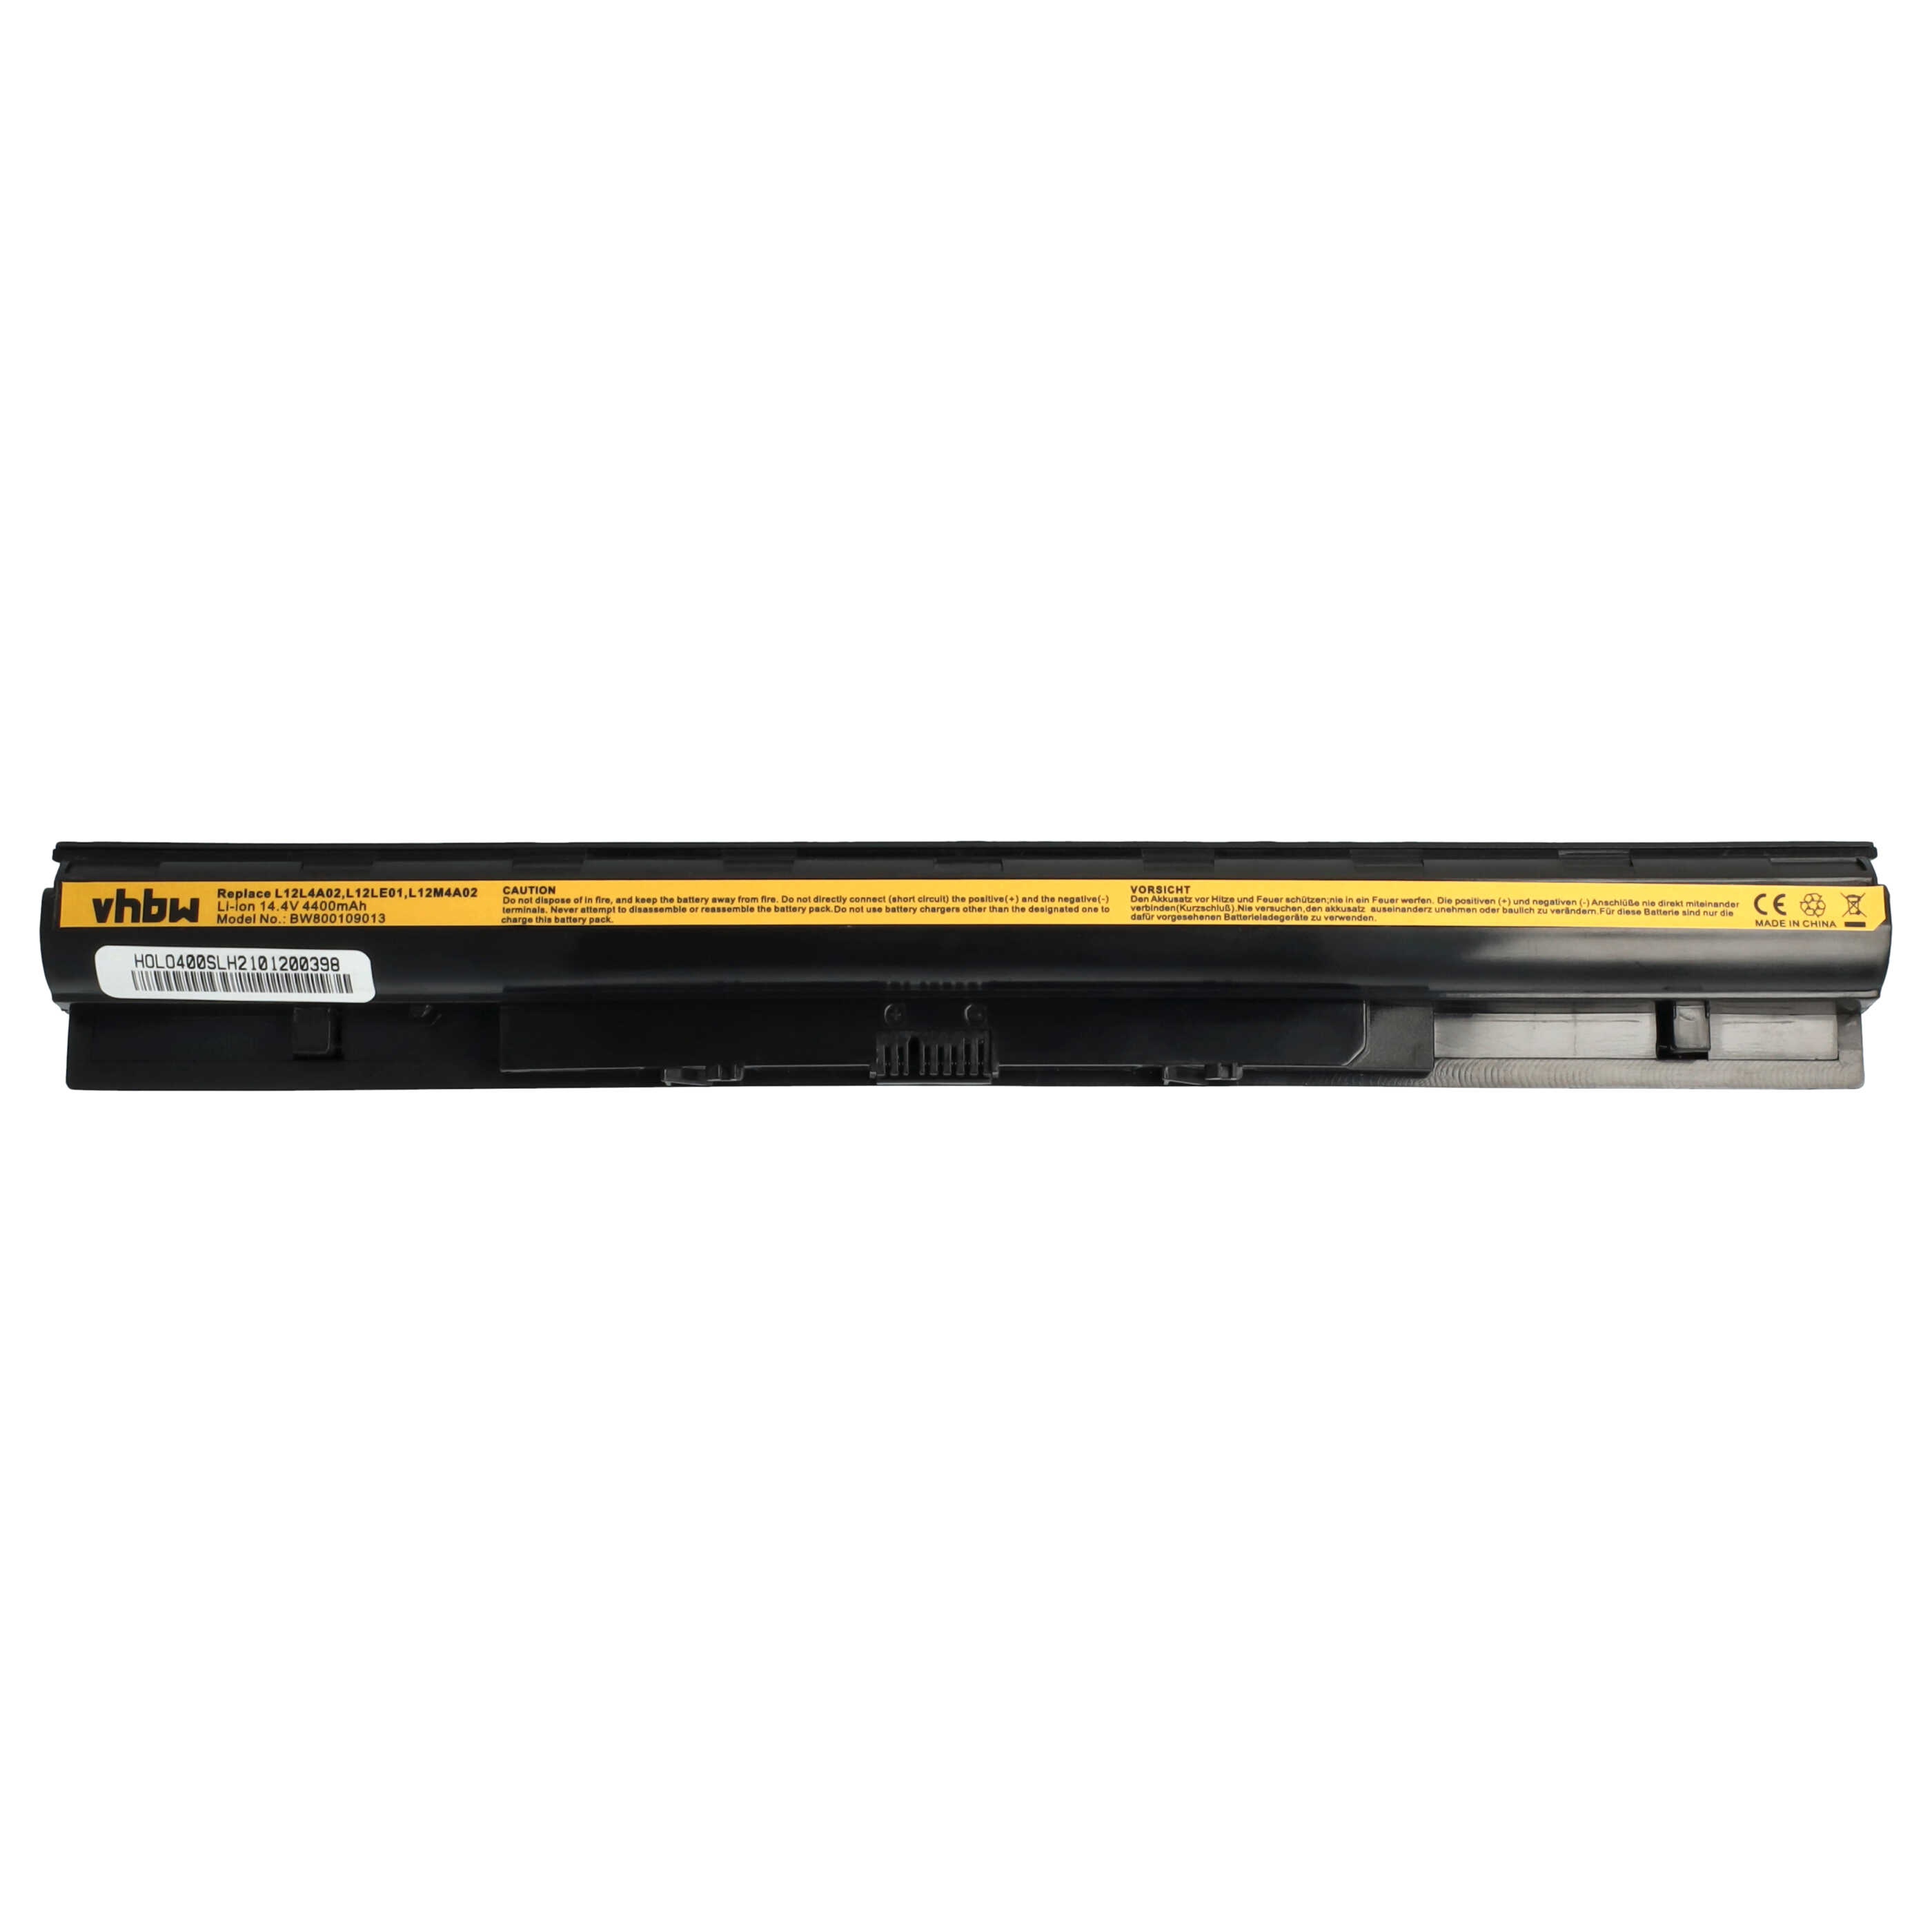 Akumulator do laptopa zamiennik Lenovo 121500171, 121500172, 121500173 - 4400 mAh 14,8 V Li-Ion, czarny